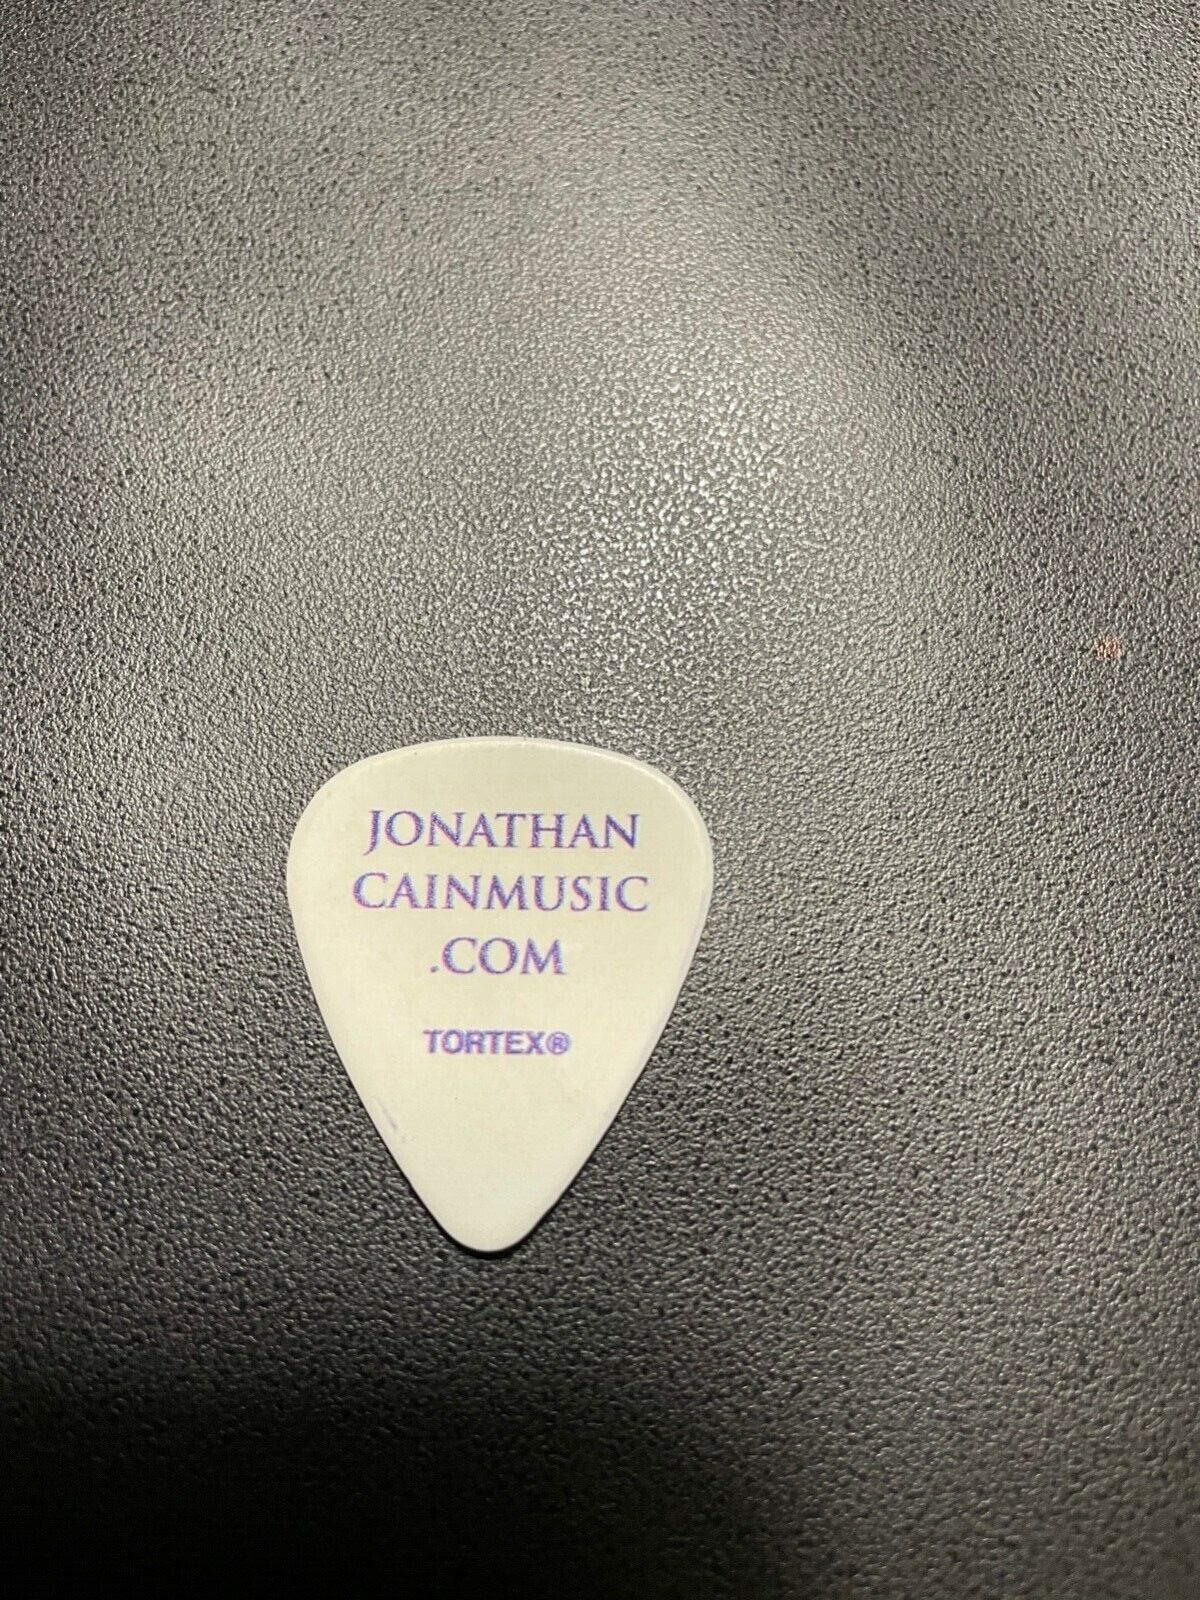 Jonathan Cain Guitar Pic